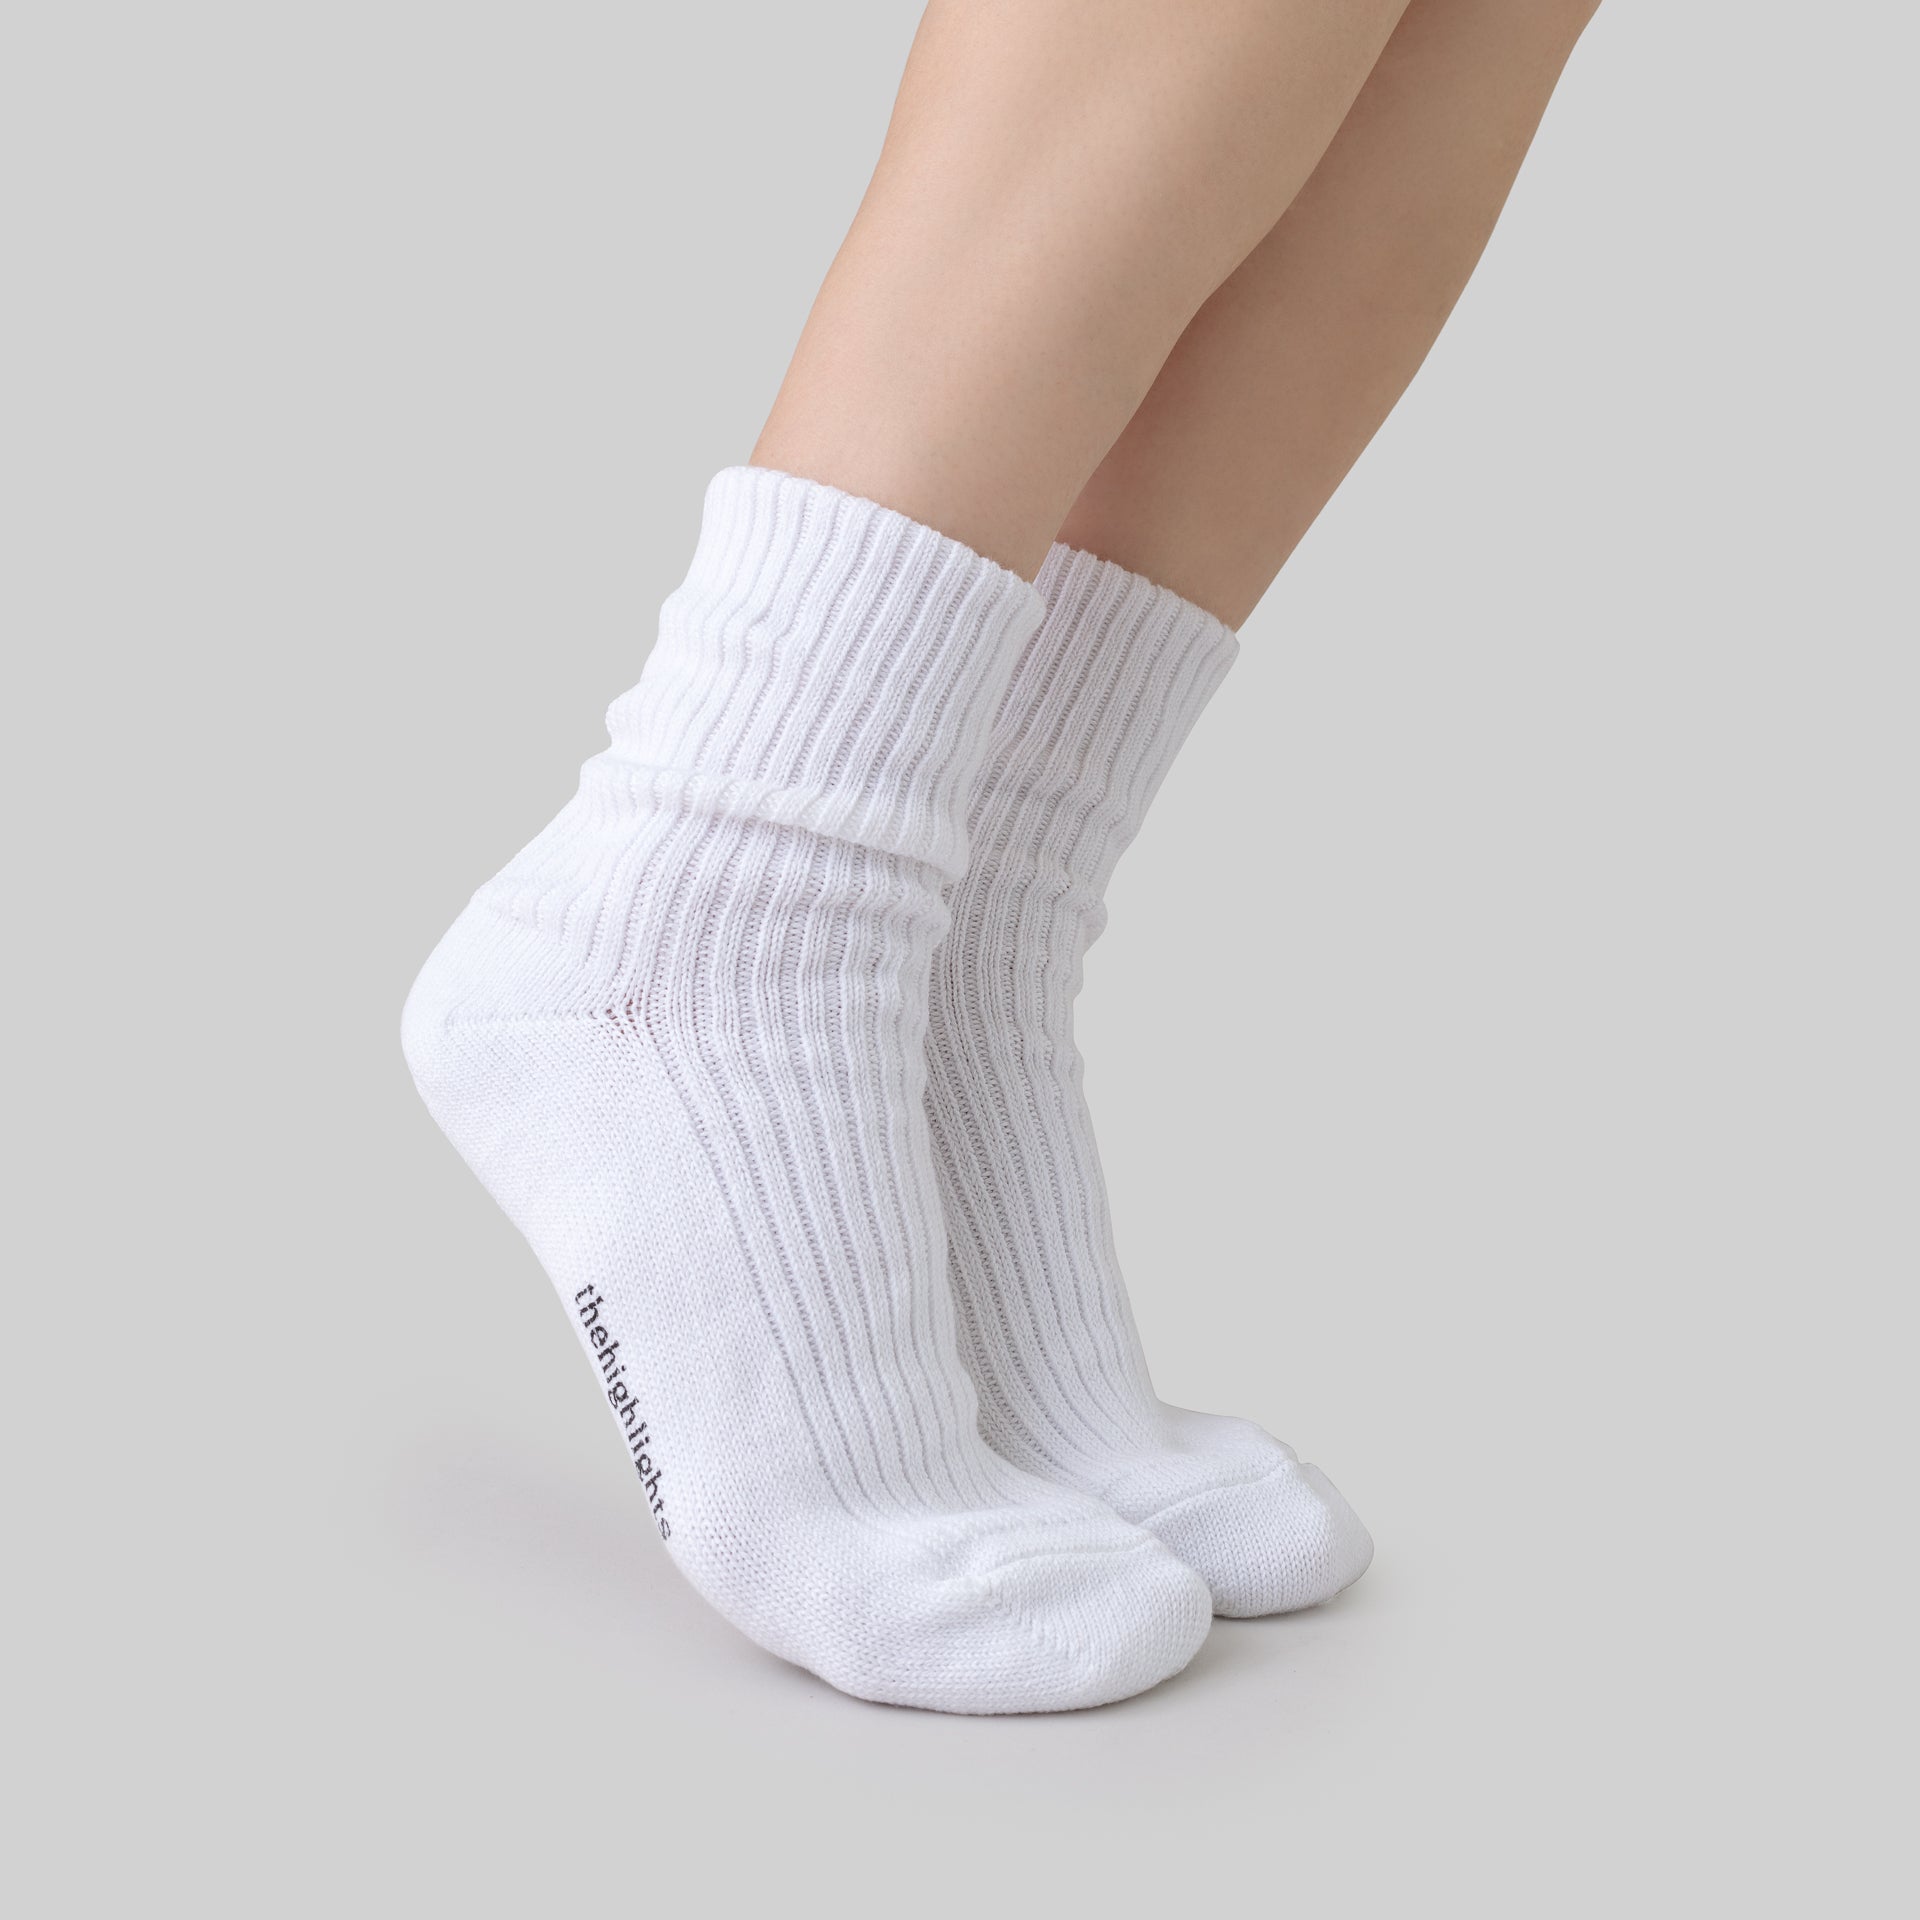 '2pair socks' heavy-duty cotton socks